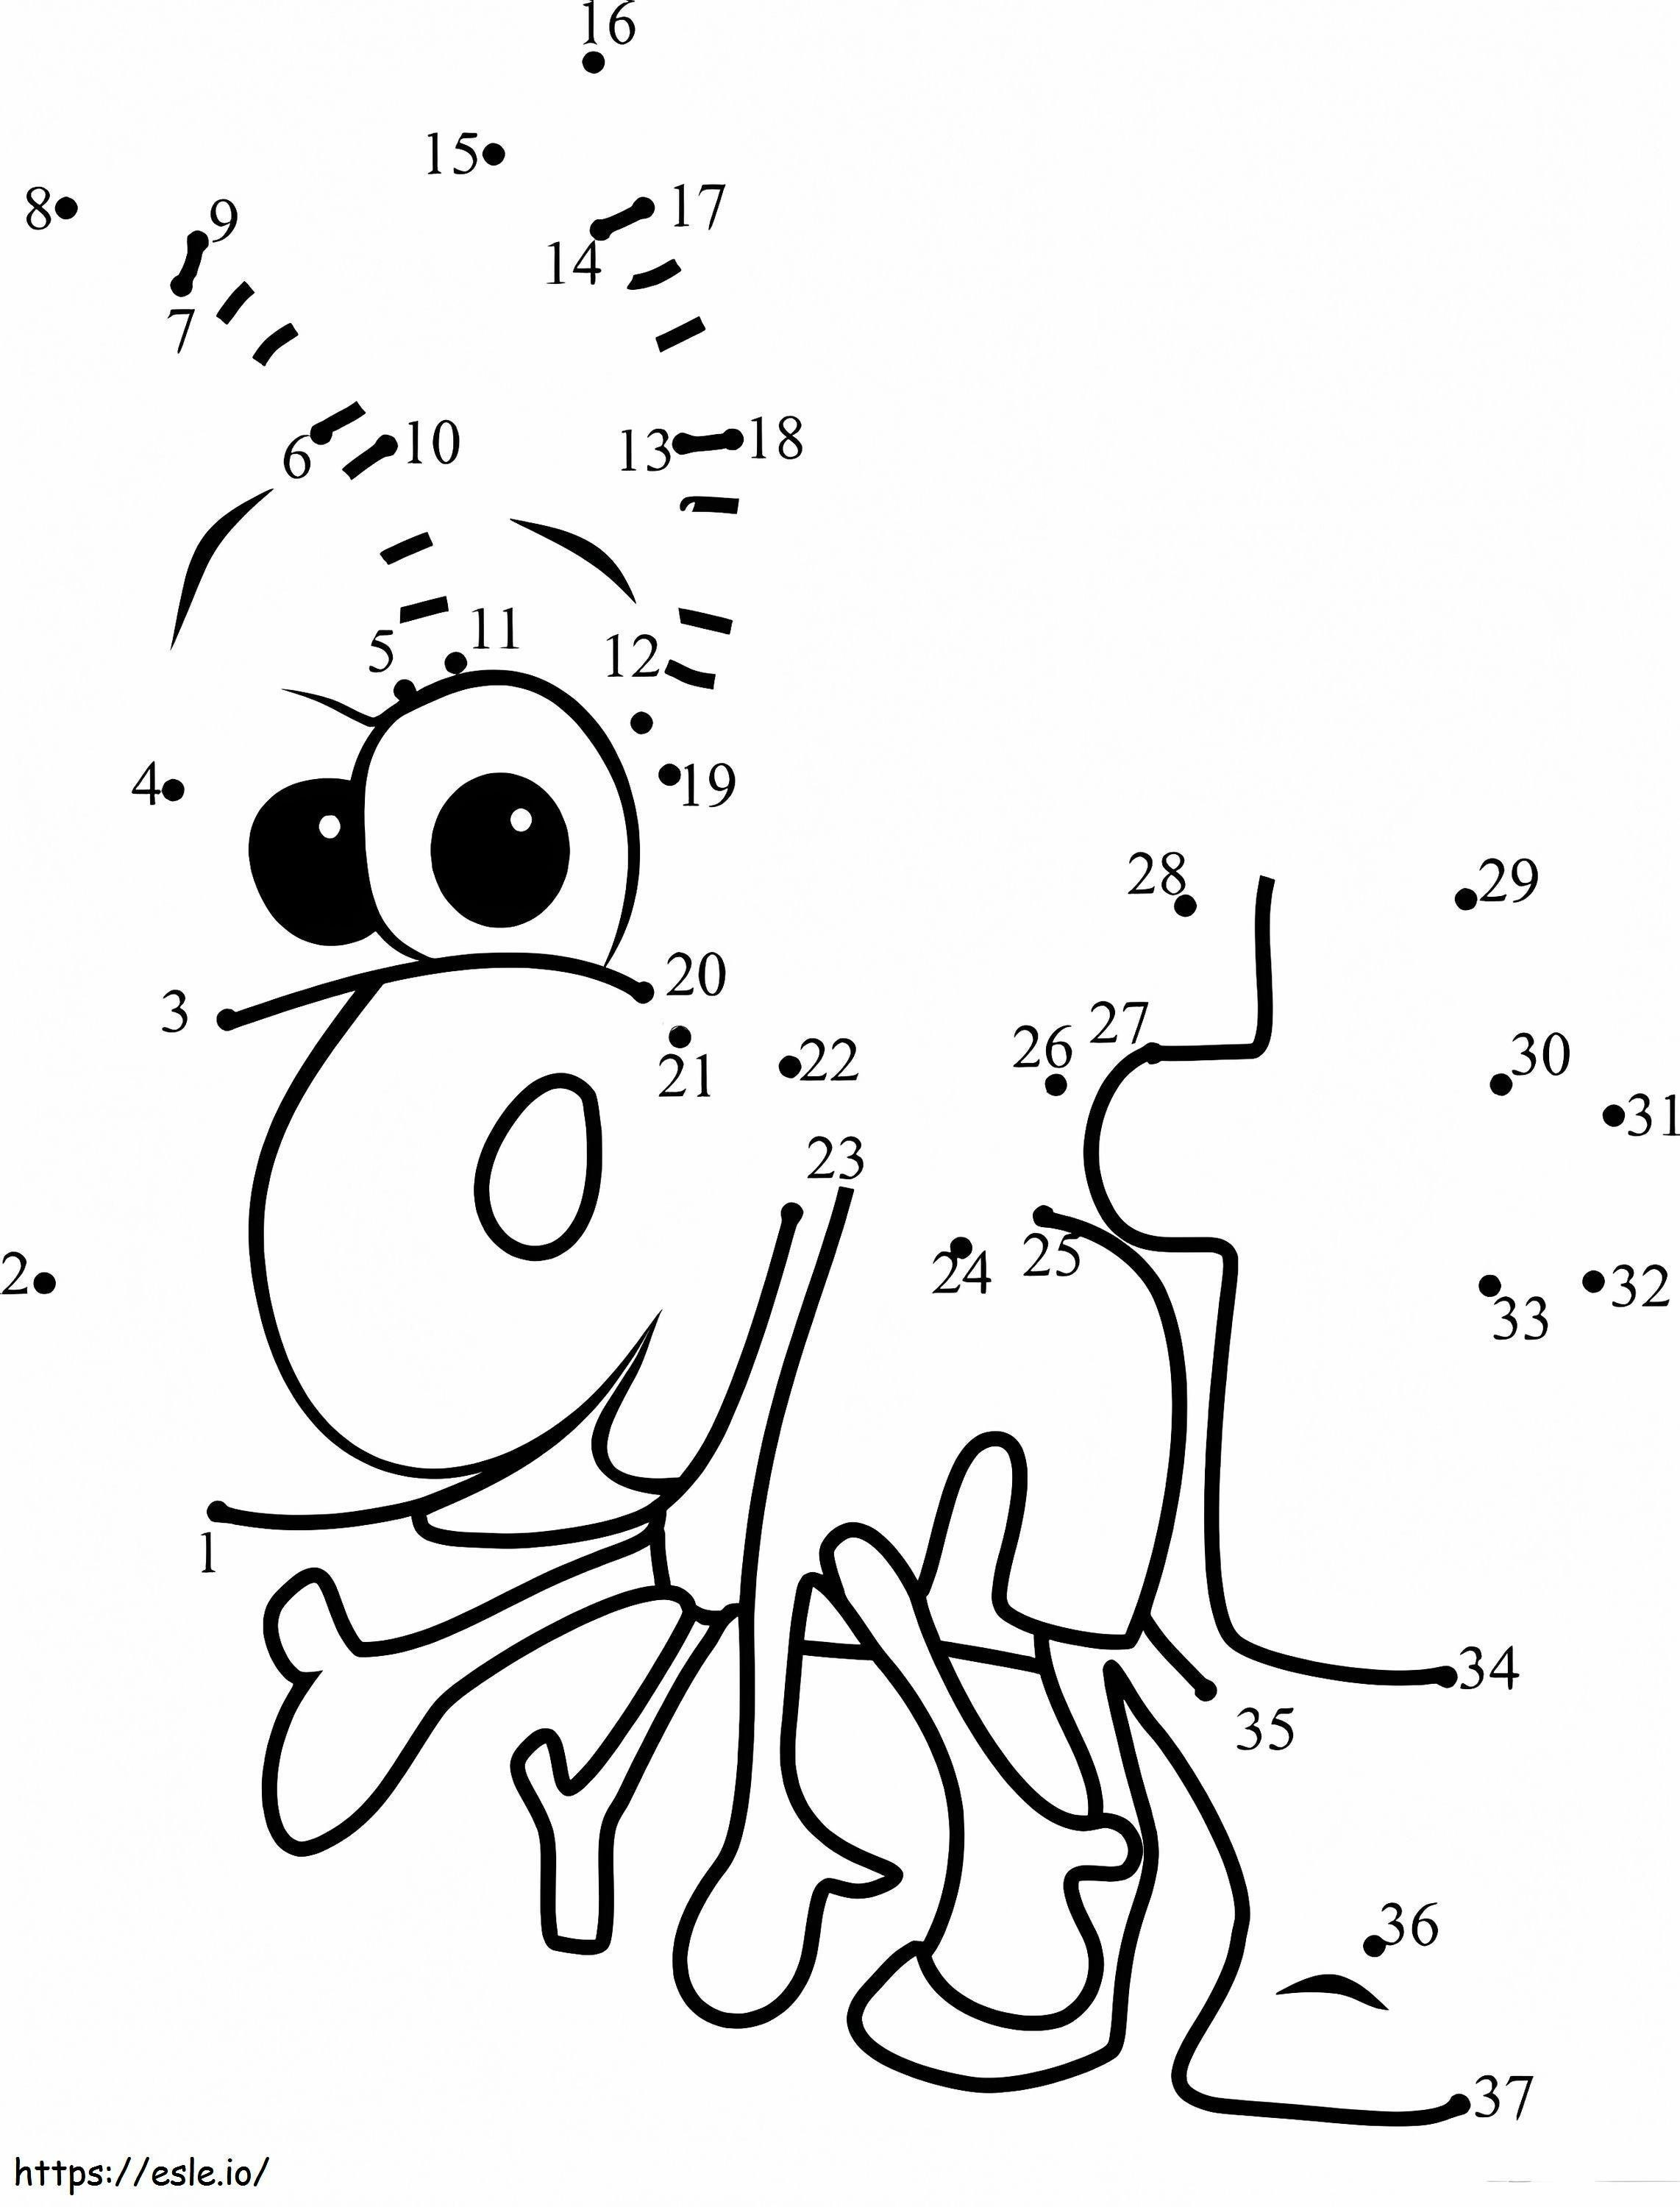 Cor da formiga por número para colorir